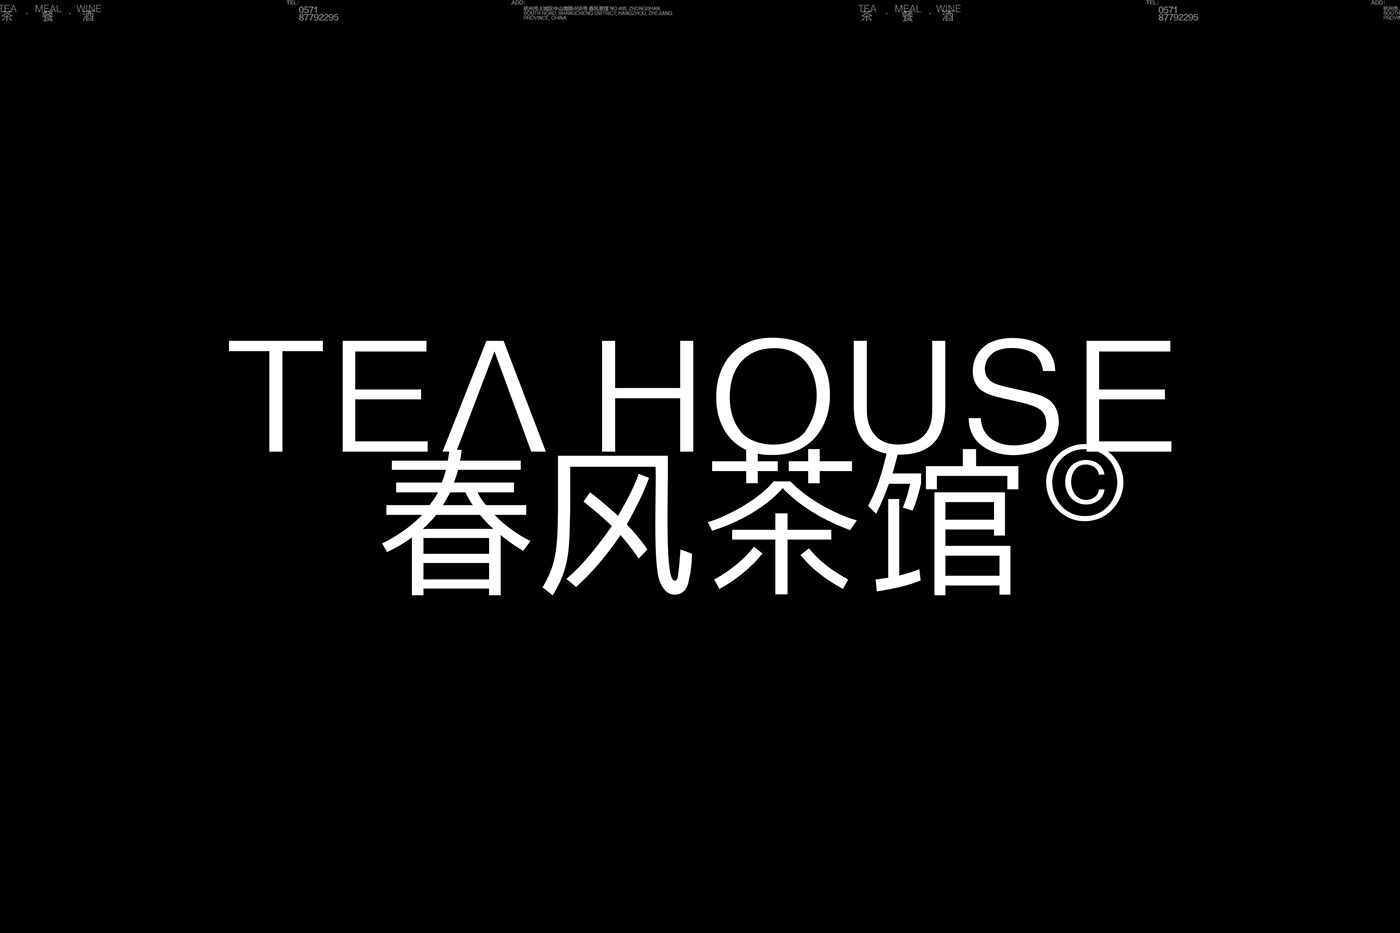 teahouse chinese fontdesign 字體設計 tea VI